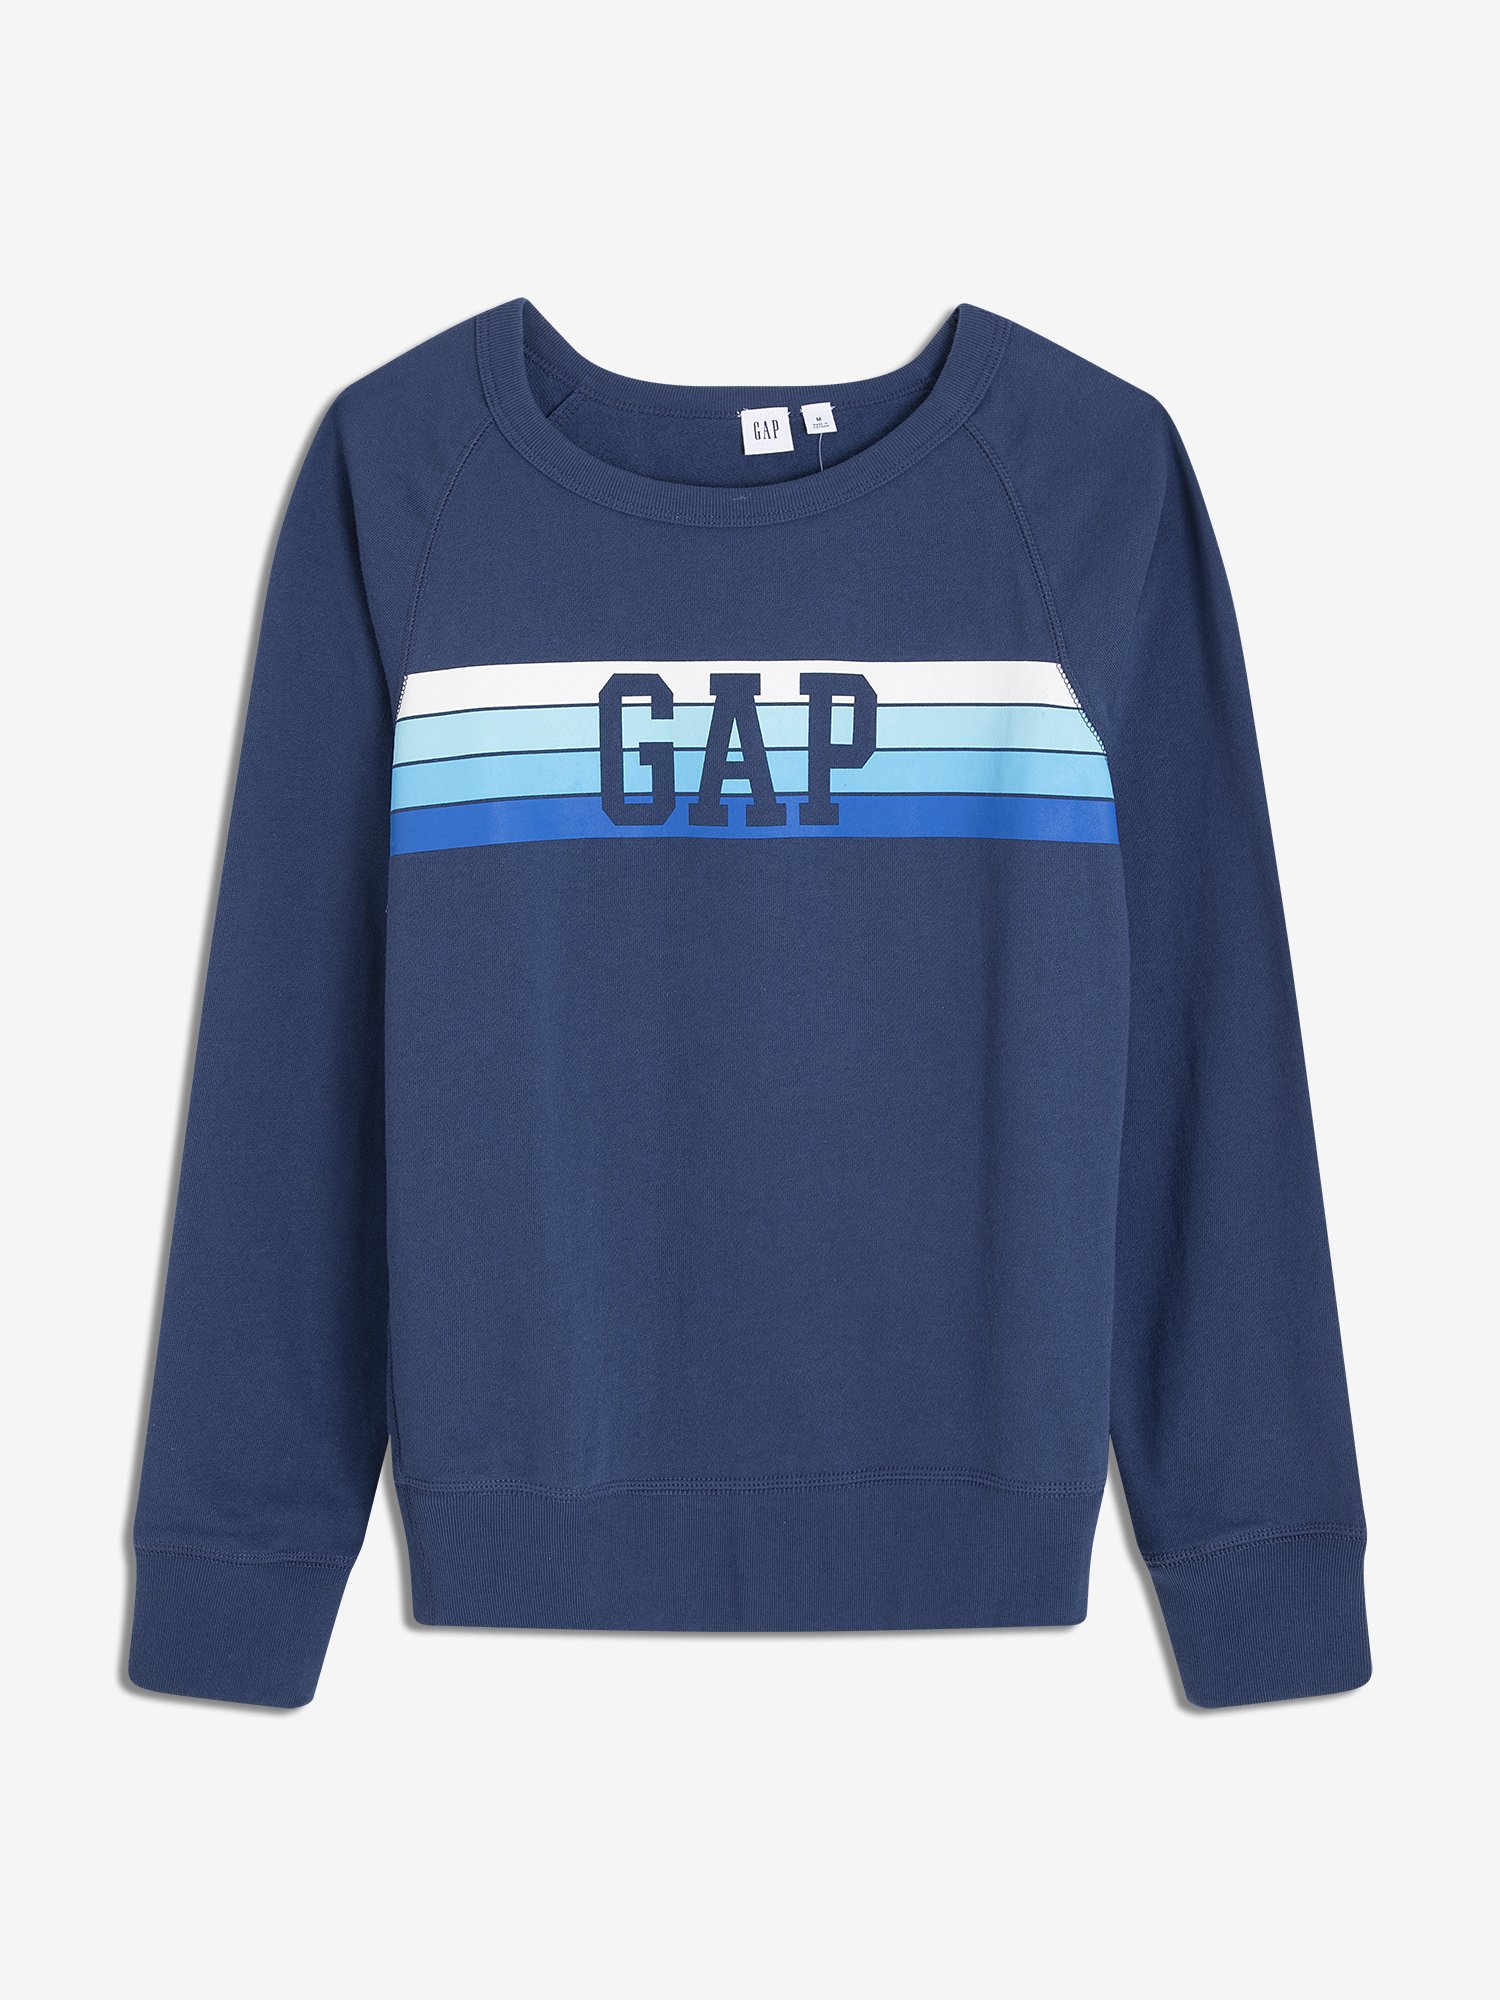 Kadın Gap Logo Sweatshirt product image